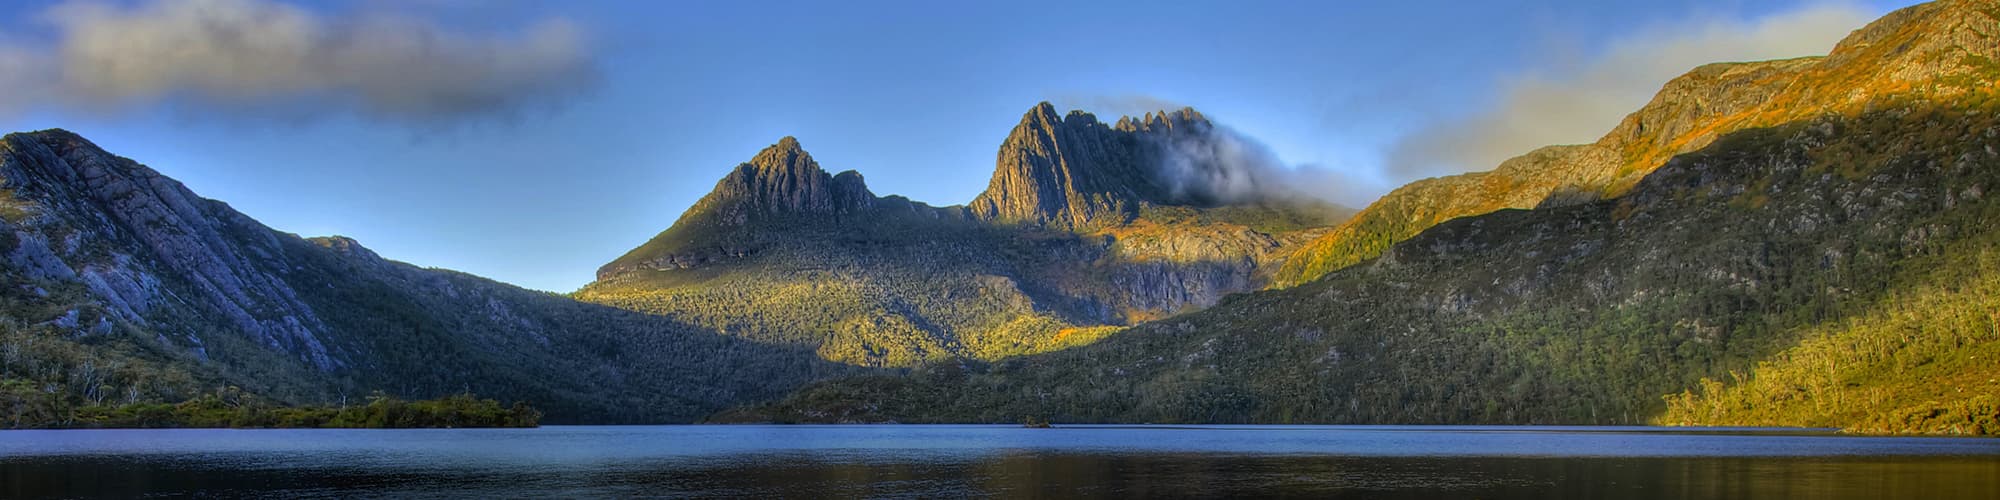 Randonnée en Tasmanie : Trek, circuit et Voyage  © Offlines - iStock